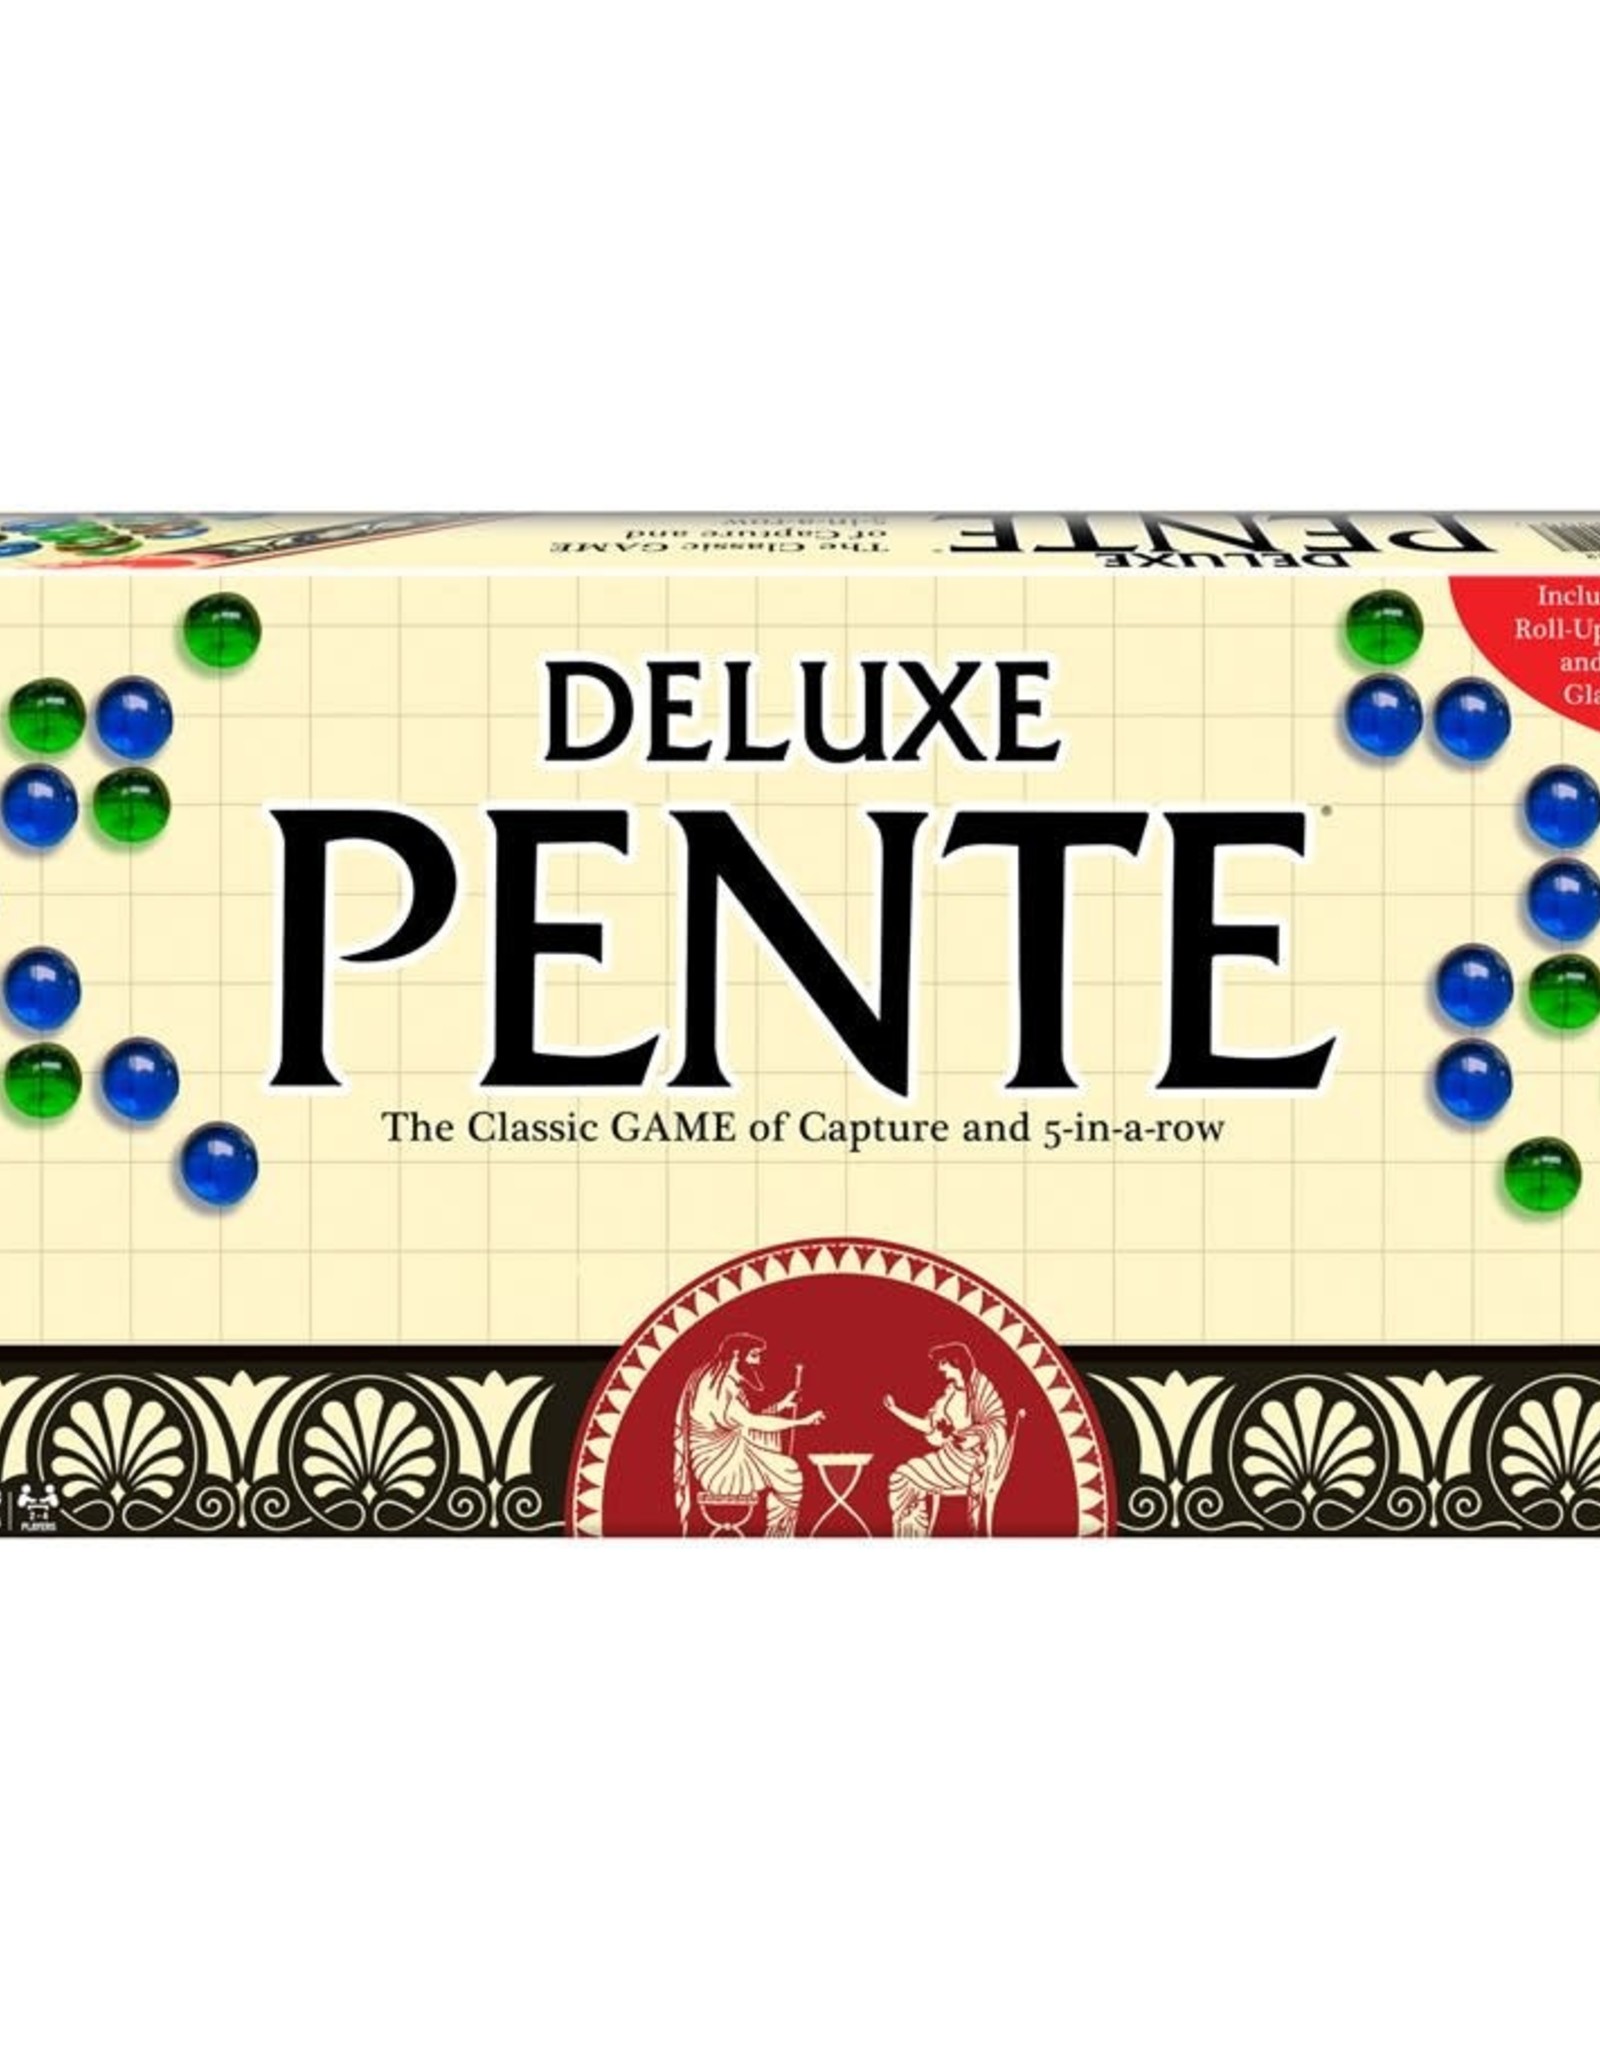 Winning Moves Pente Deluxe